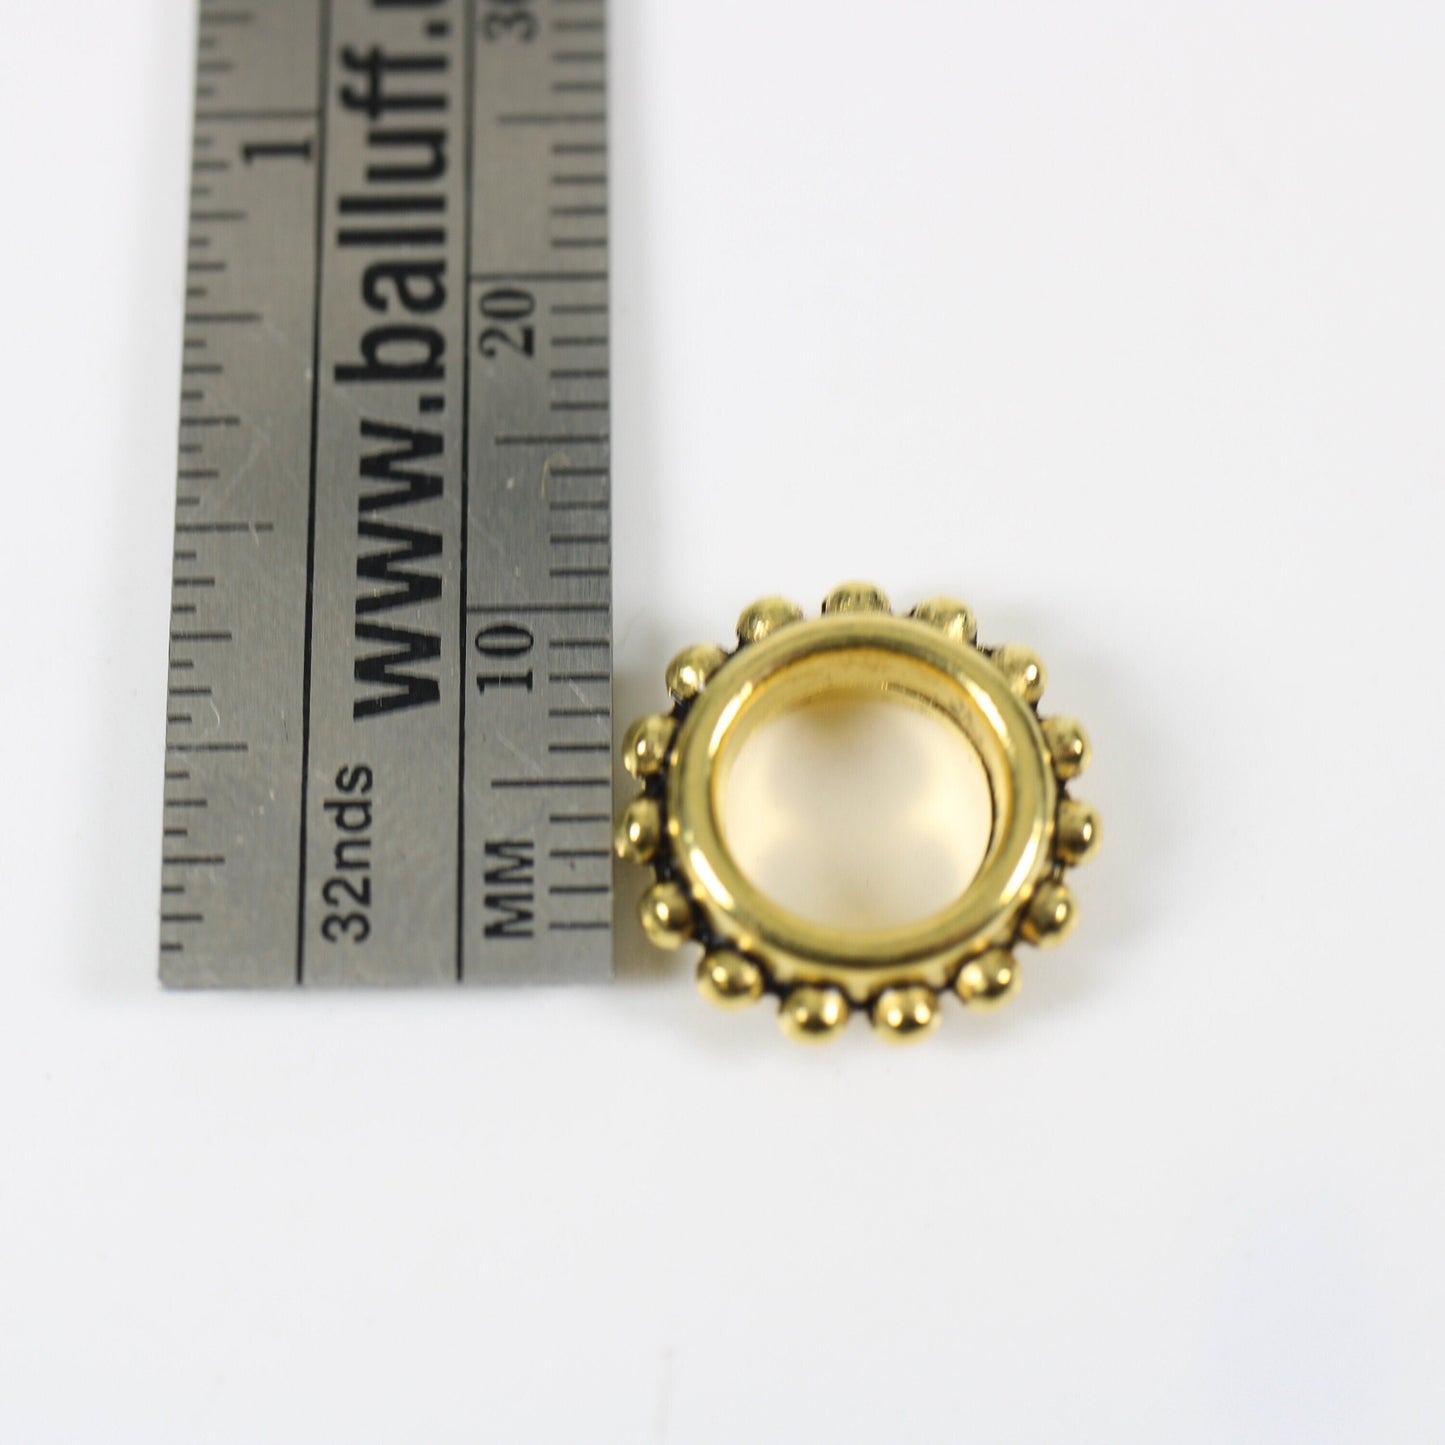 5 Gold Stackable Dreadlock Bead - 7mm bead hole - Large Hole Beads for Jewelry, Flower dread bead, Dreadlocks, metal dread bead